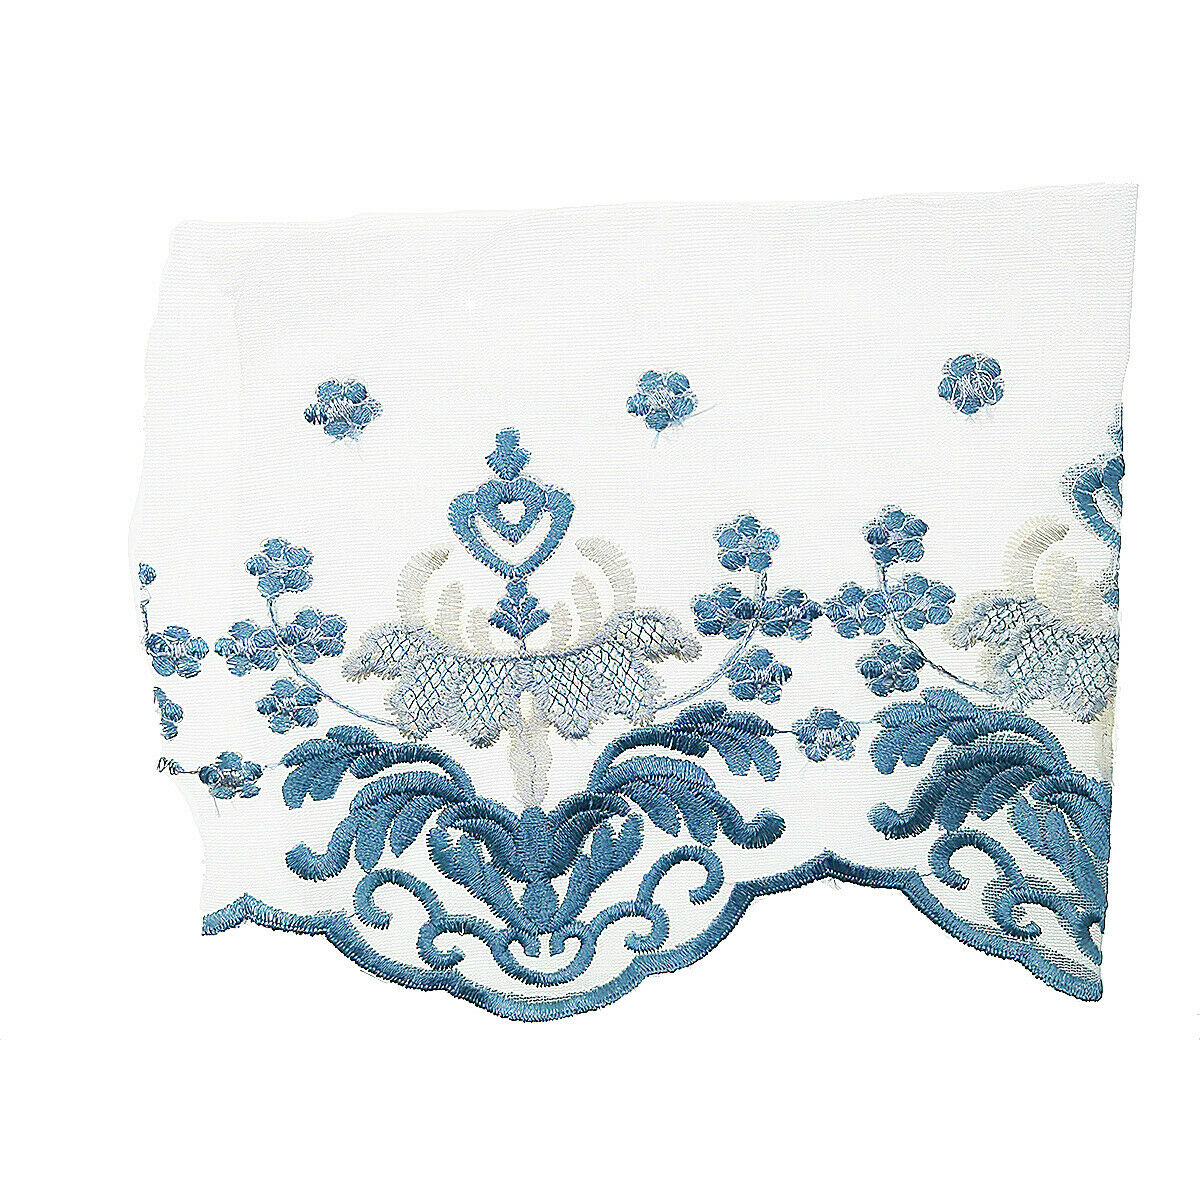 1 Yard Blue Flower Embroidery Lace Ribbon Trim Wedding Rustic Baby Shower DIY